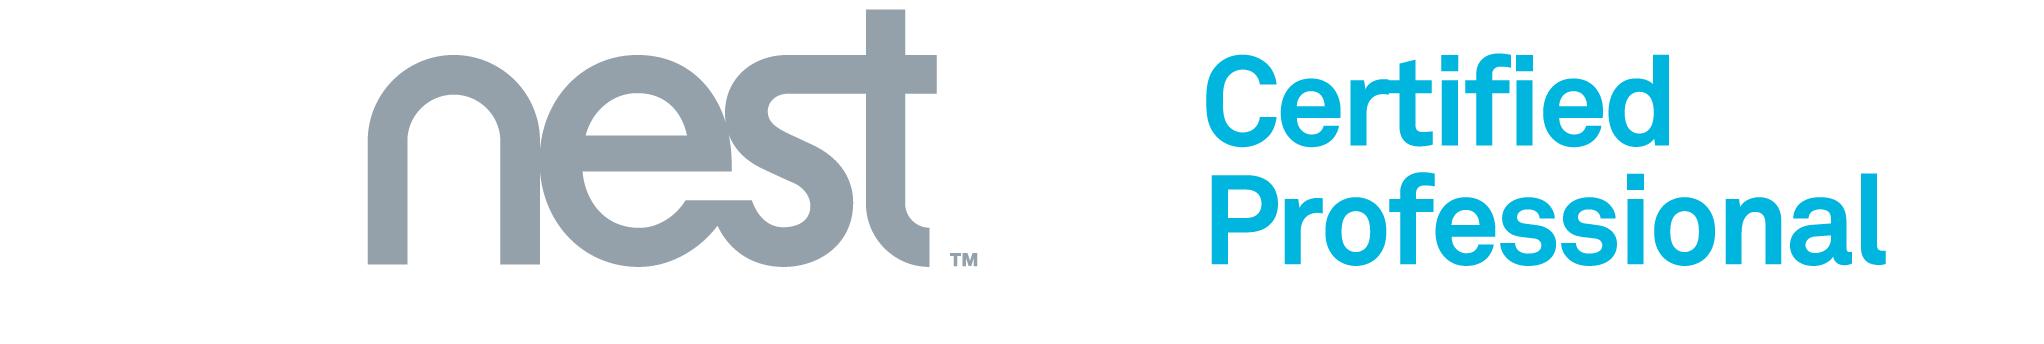 Nest Thermostat Logo - NEST Thermostats Care Systems, Inc